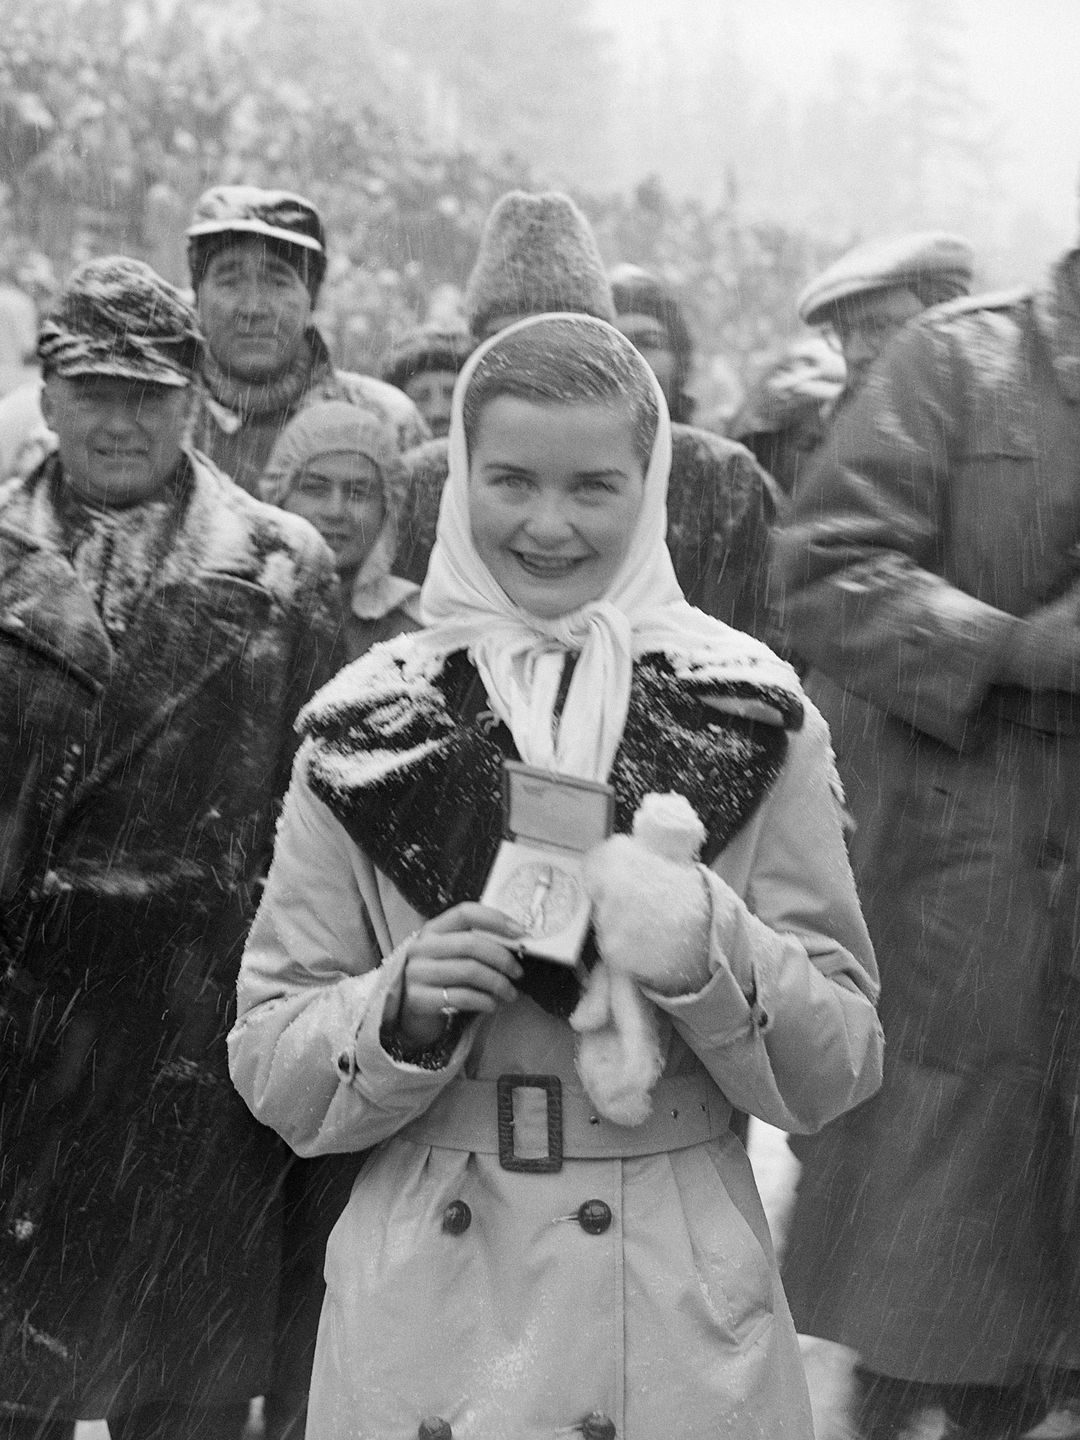 Barbara Ann Scott wins gold at the 1948 Winter Olympics in Switzerland